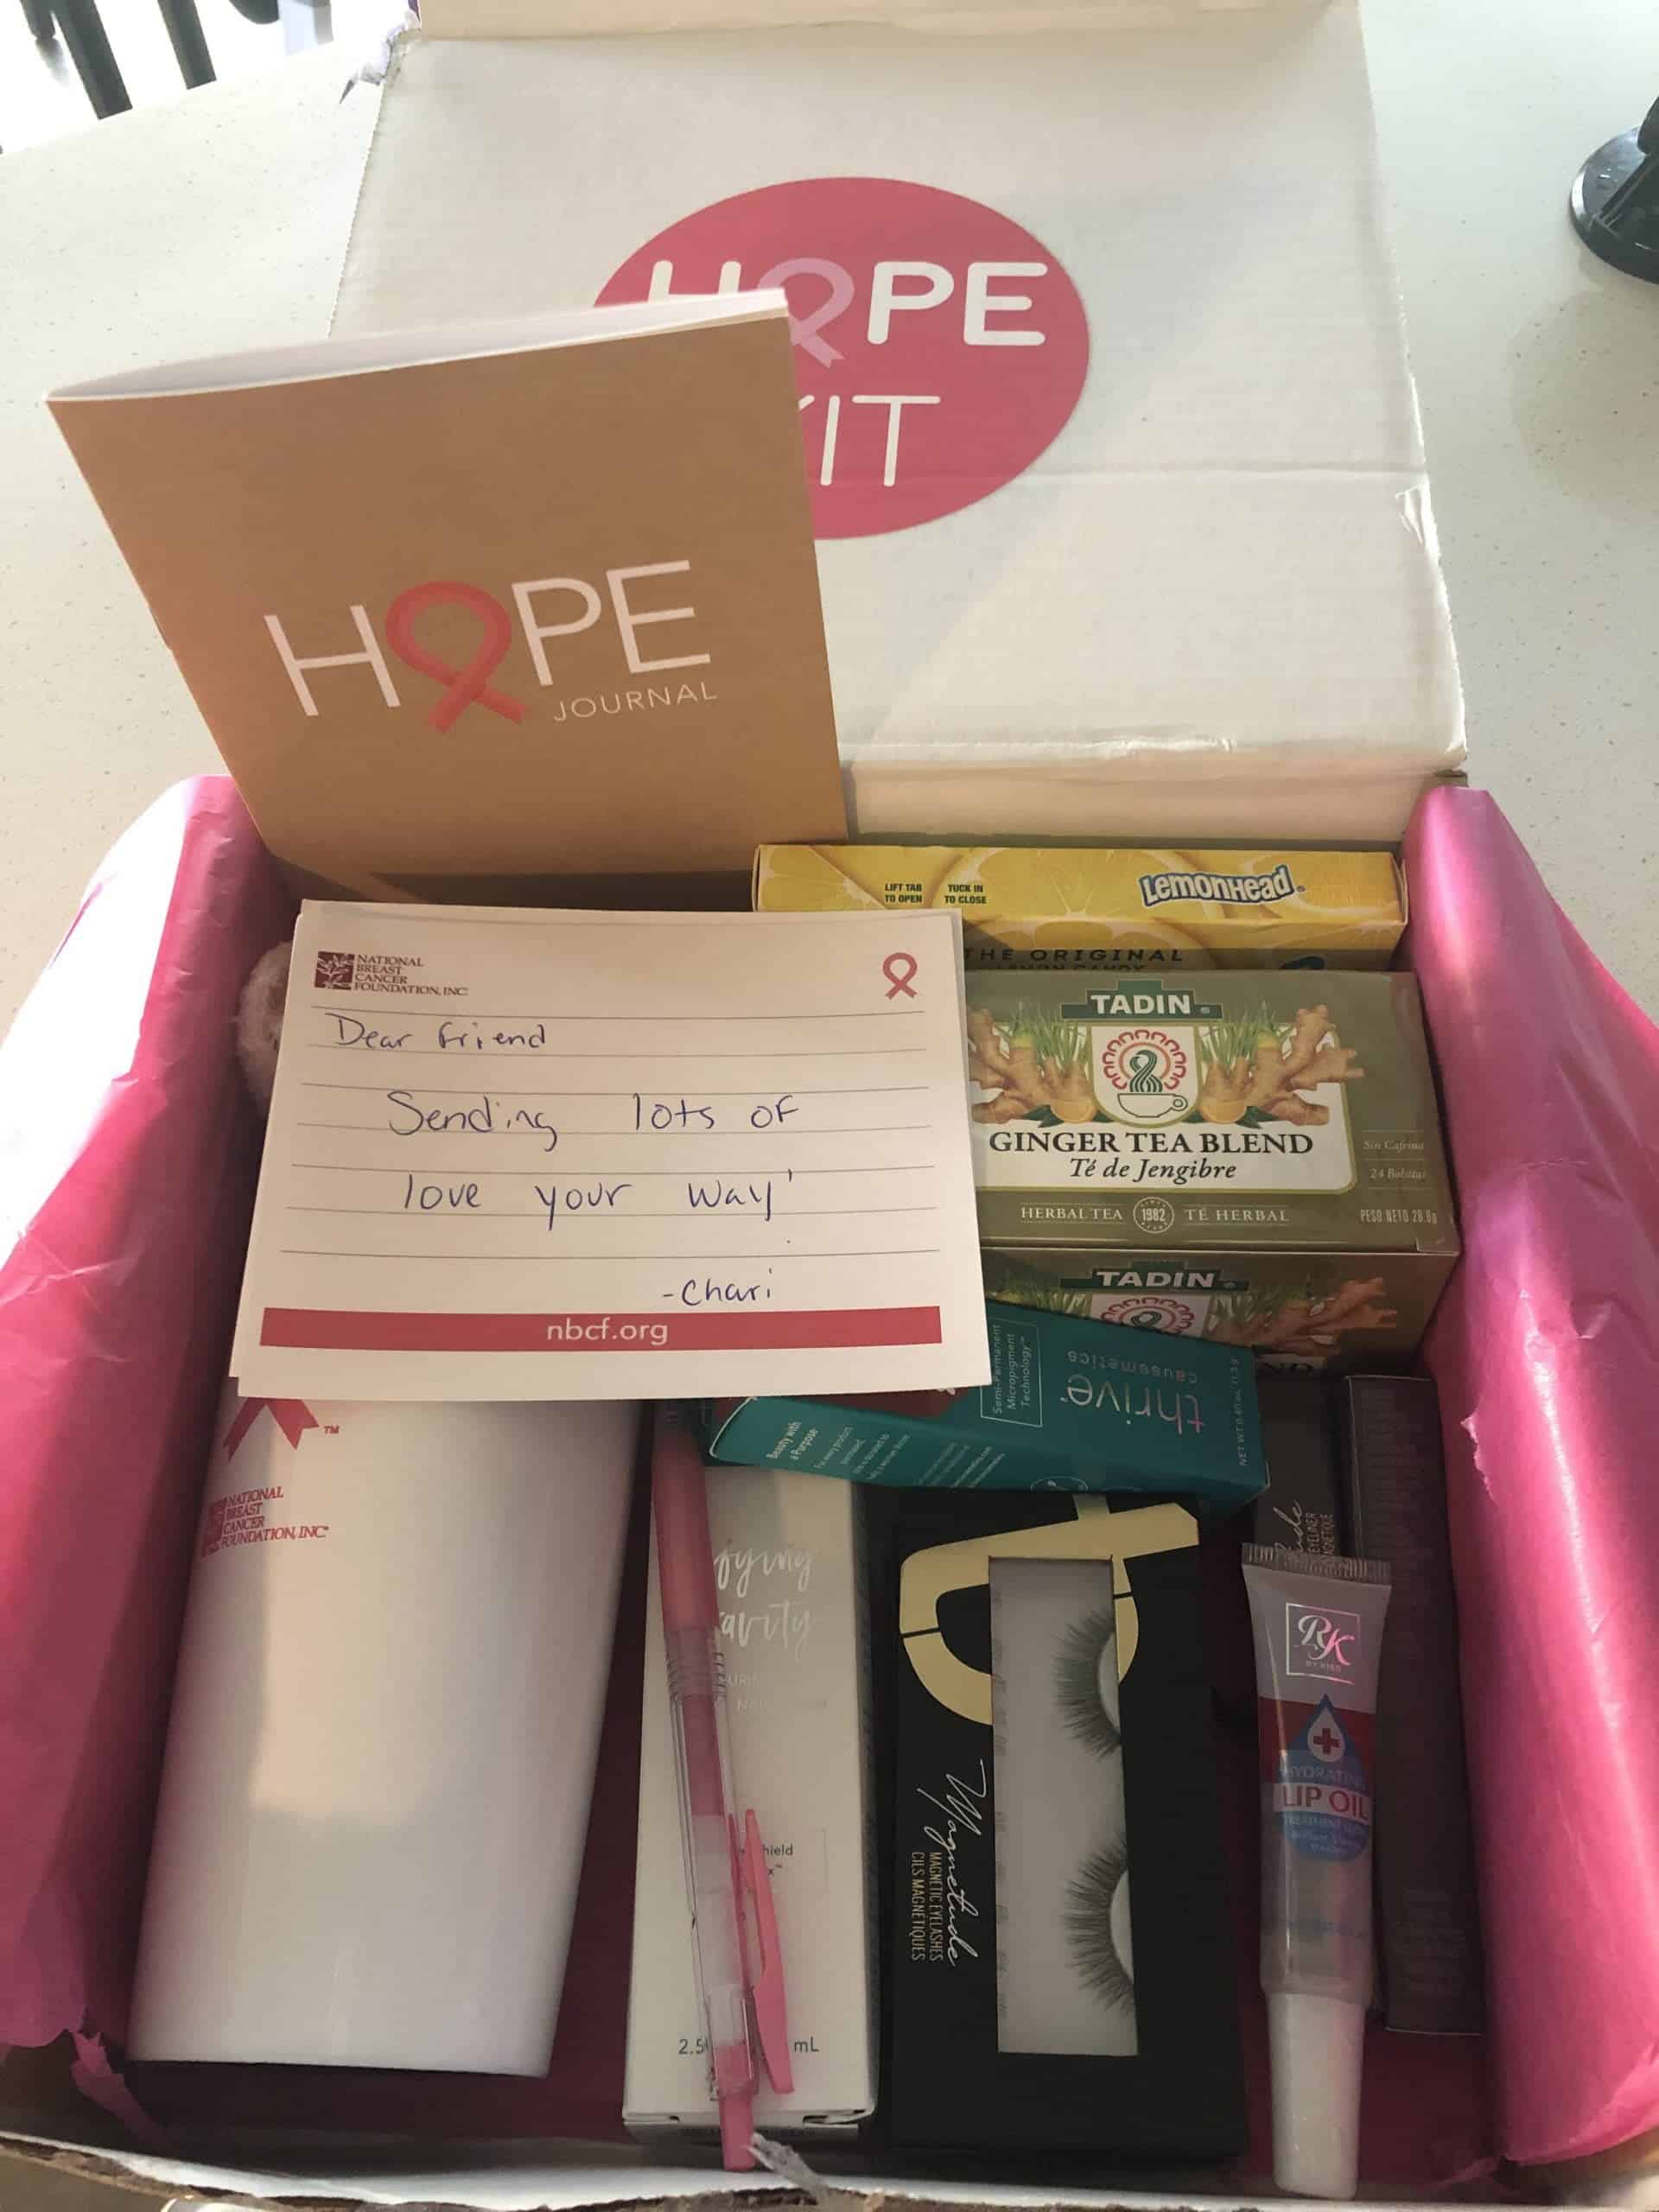 box of hope hope kit